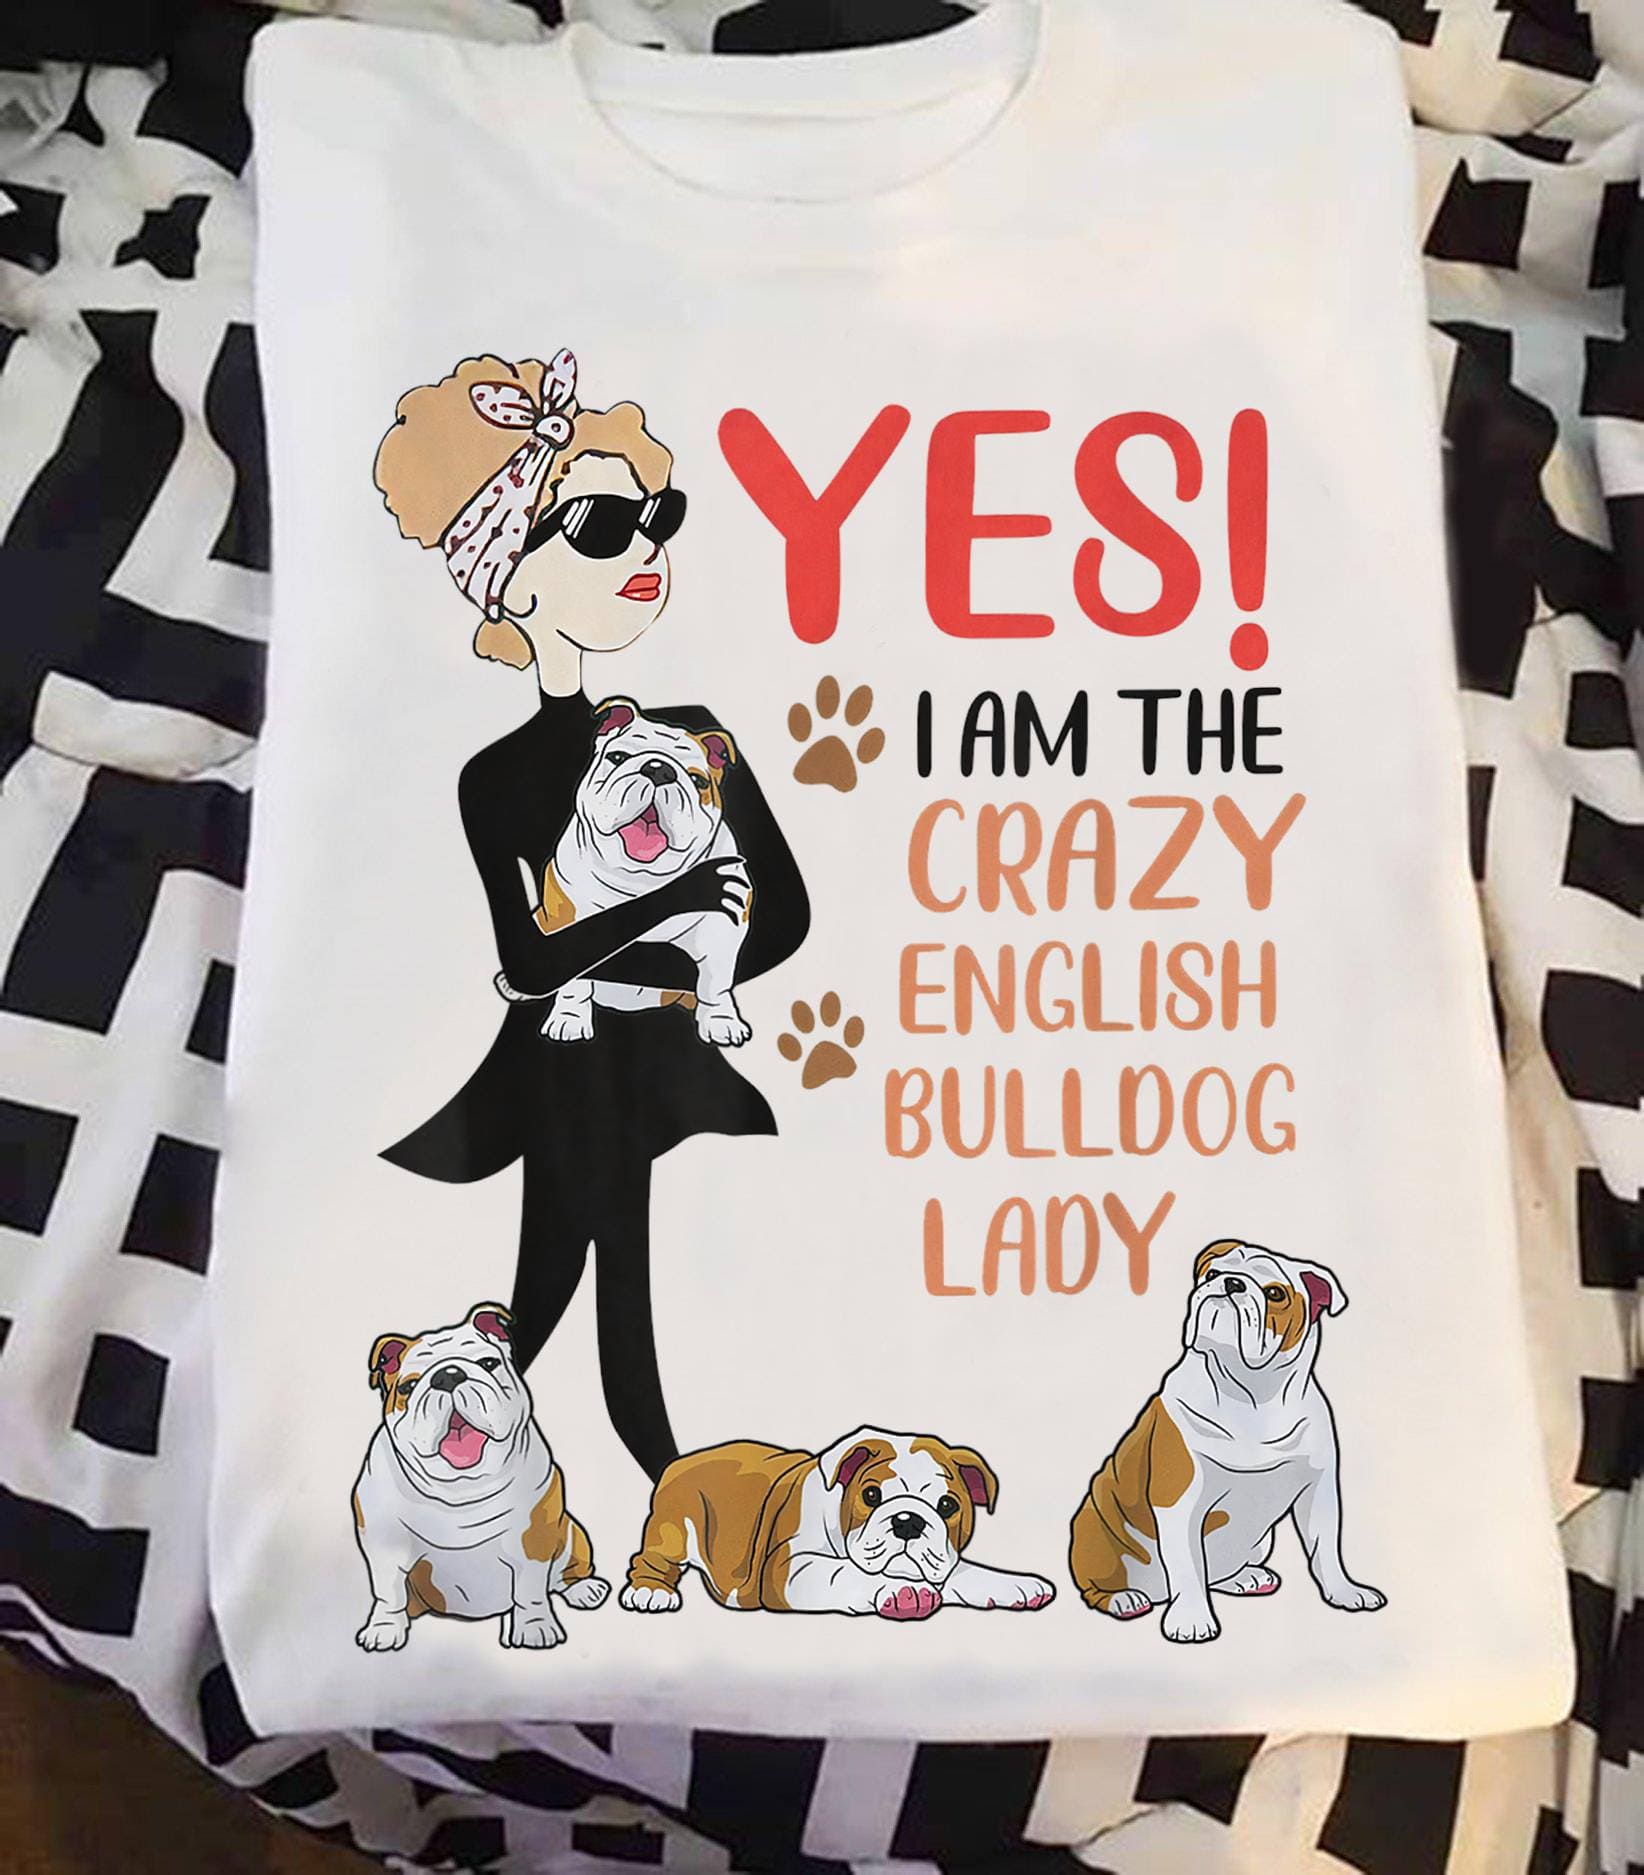 Bulldog Woman - Yes! I am the crazy english bulldog lady